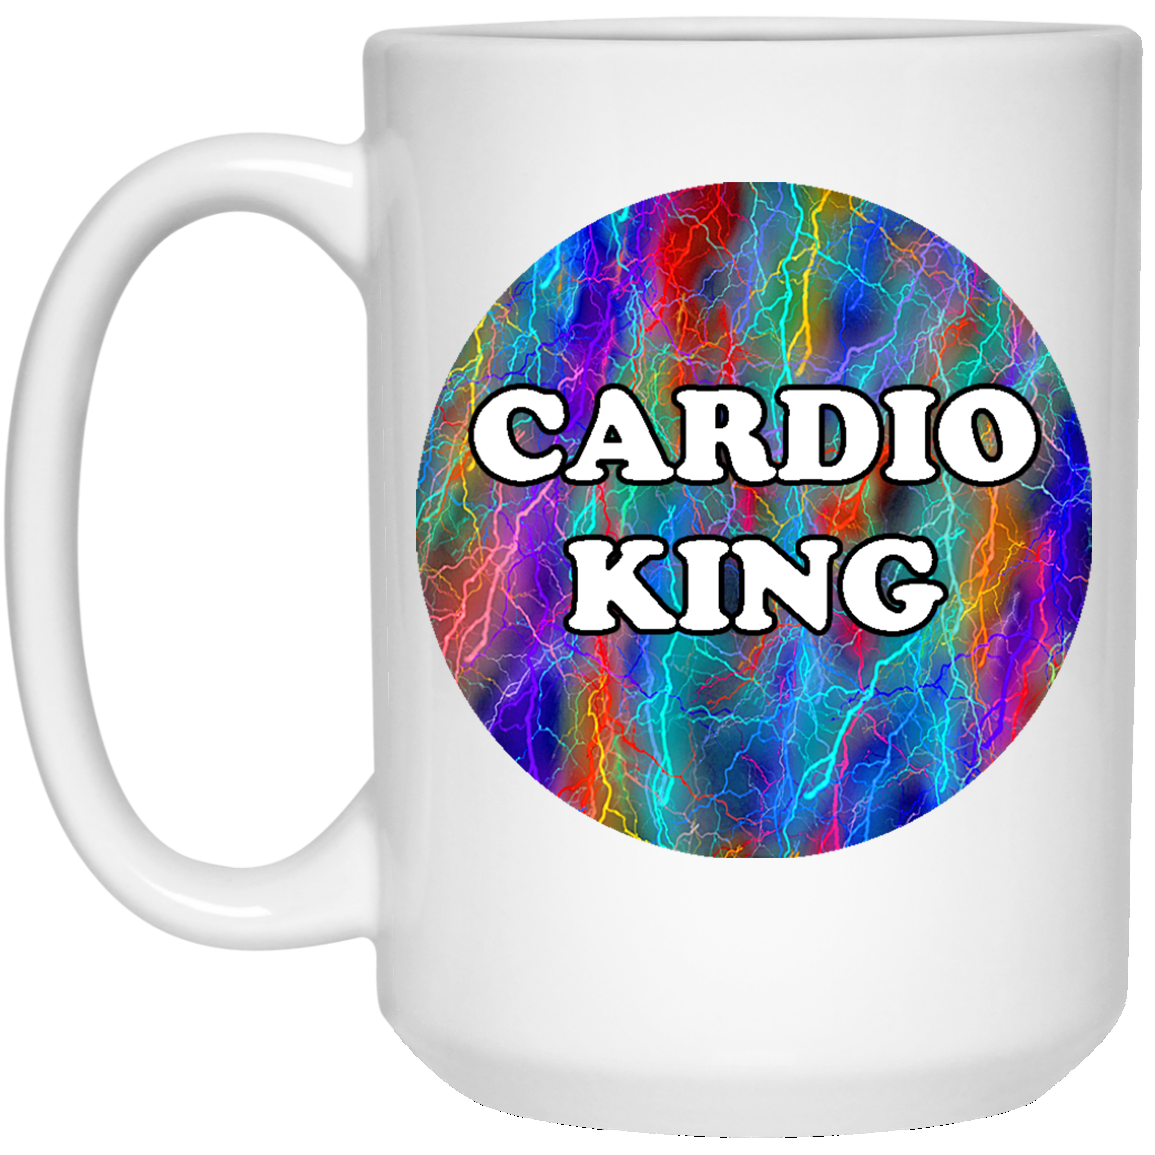 CARDIO KING SPORT MUG